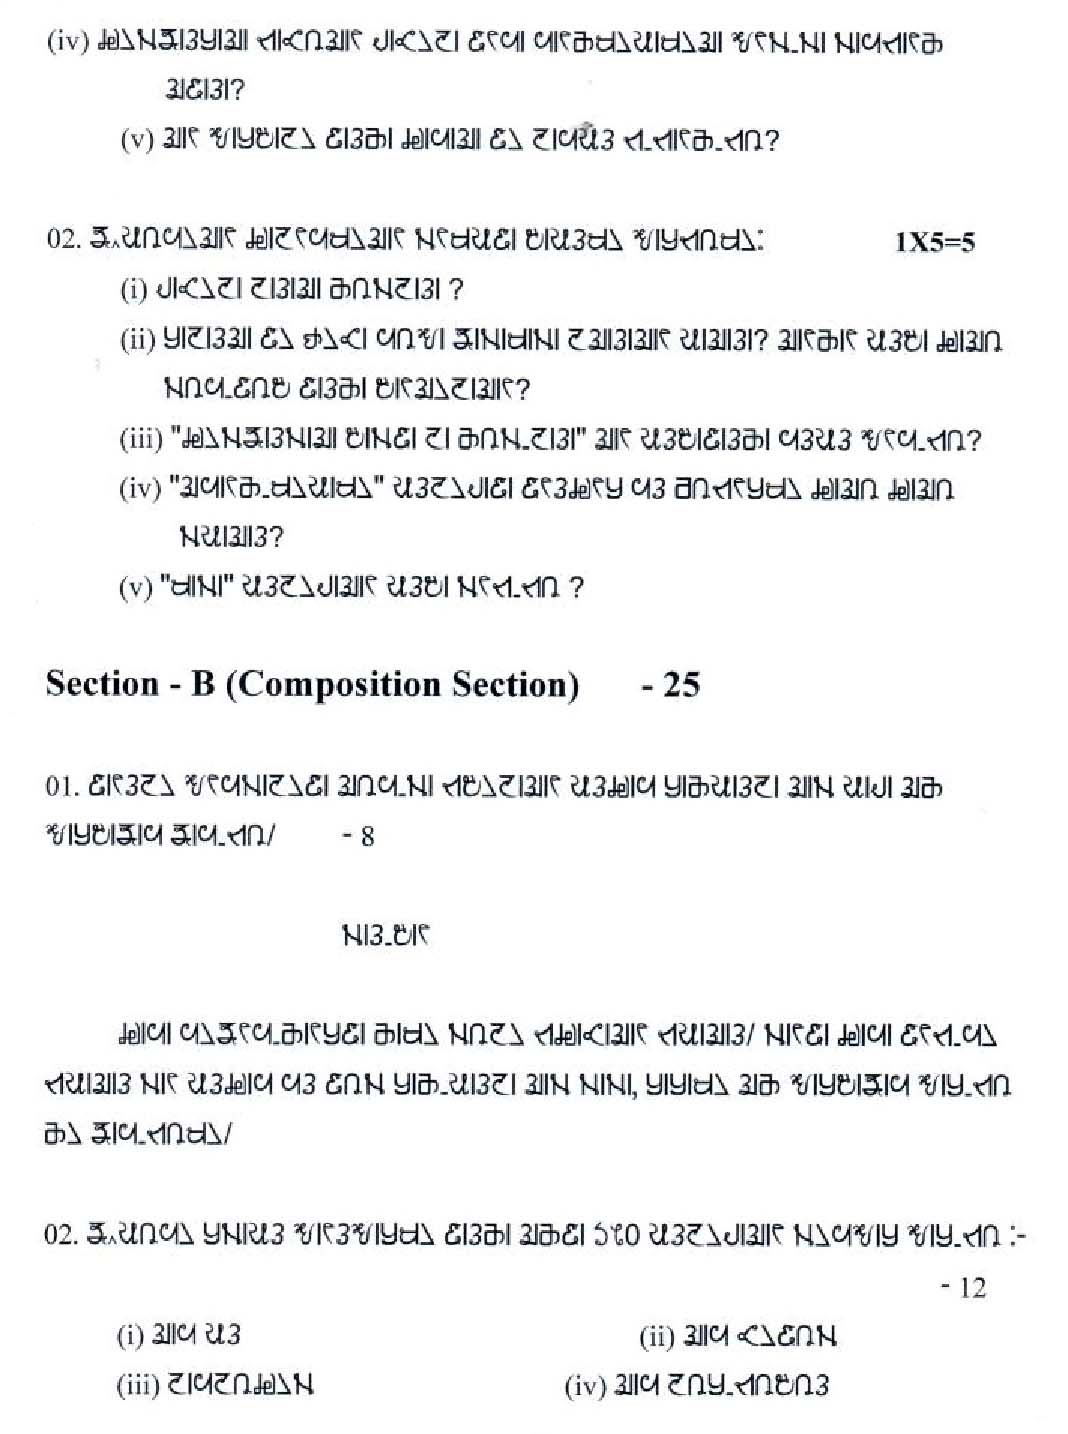 Rai CBSE Class X Sample Question Paper 2018-19 - Image 2